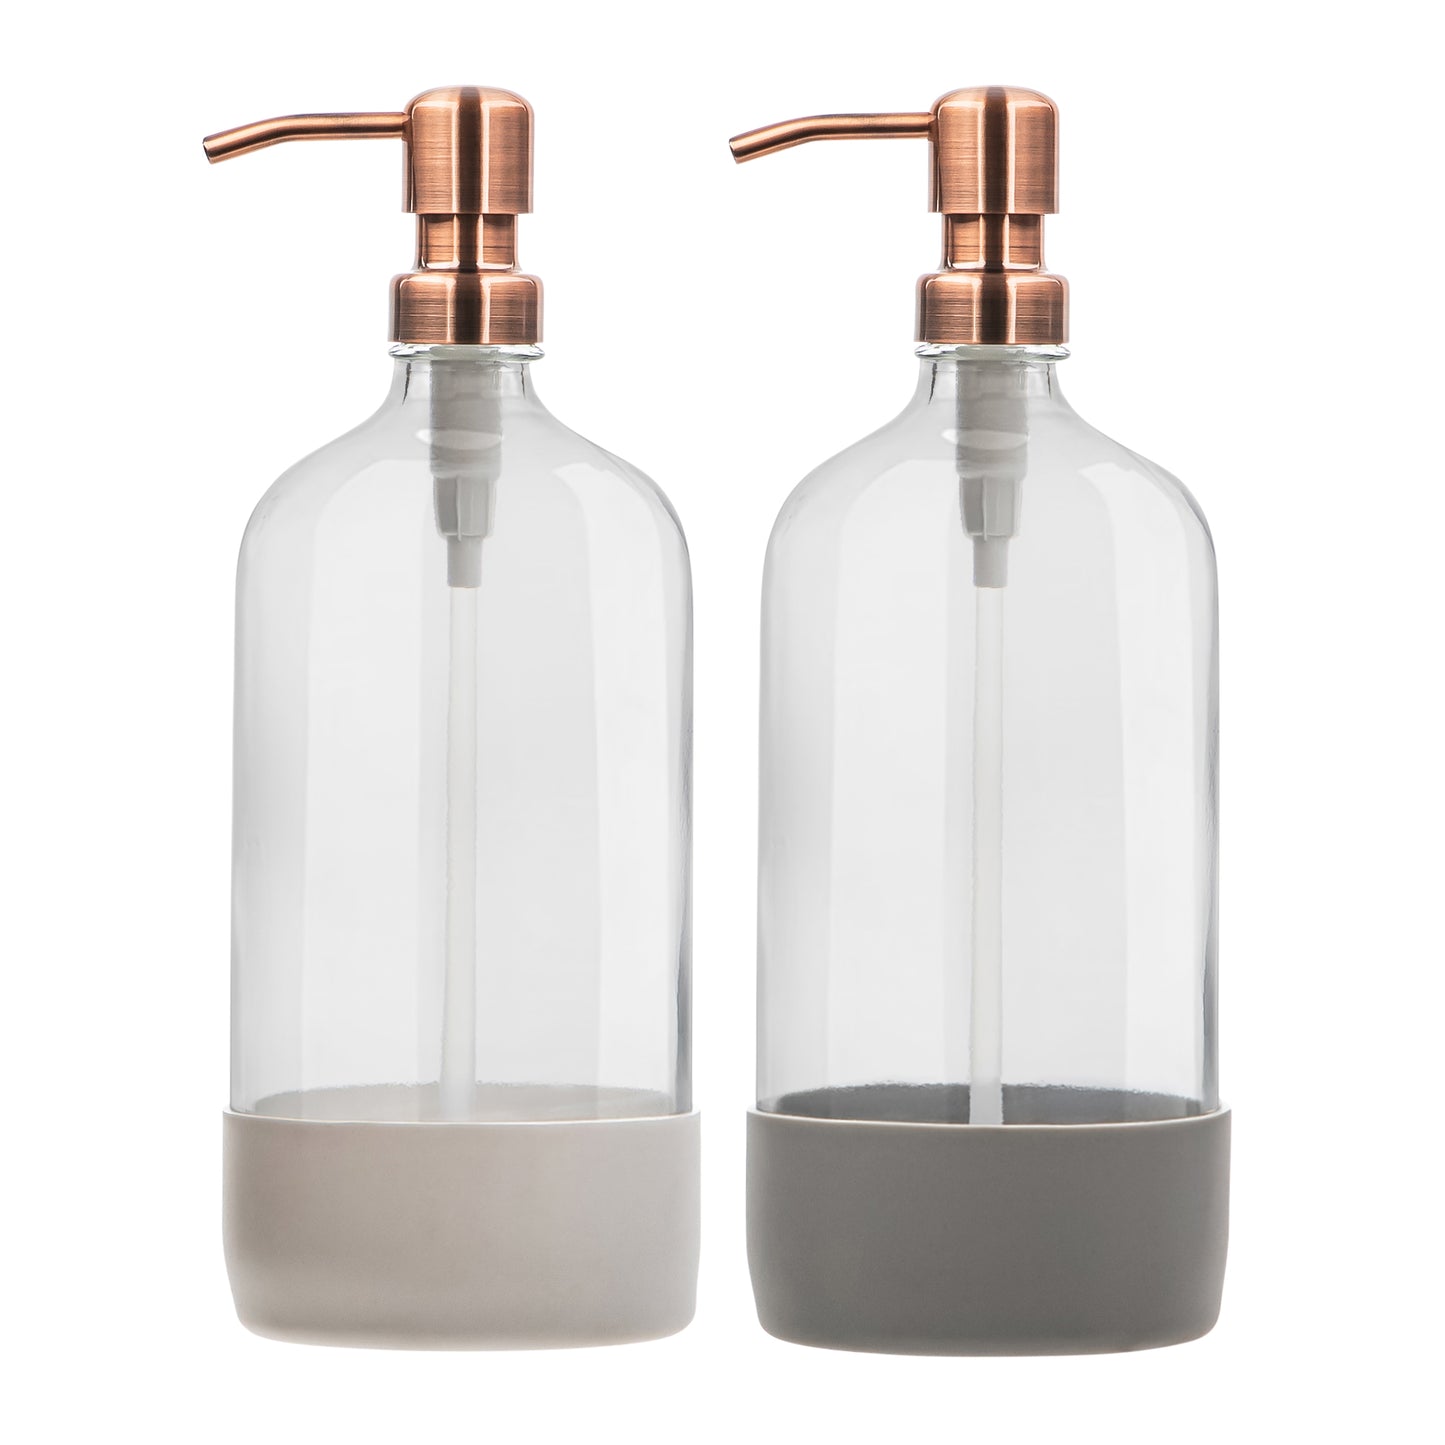 32oz Shampoo Soap Bottle - Metal Pumps